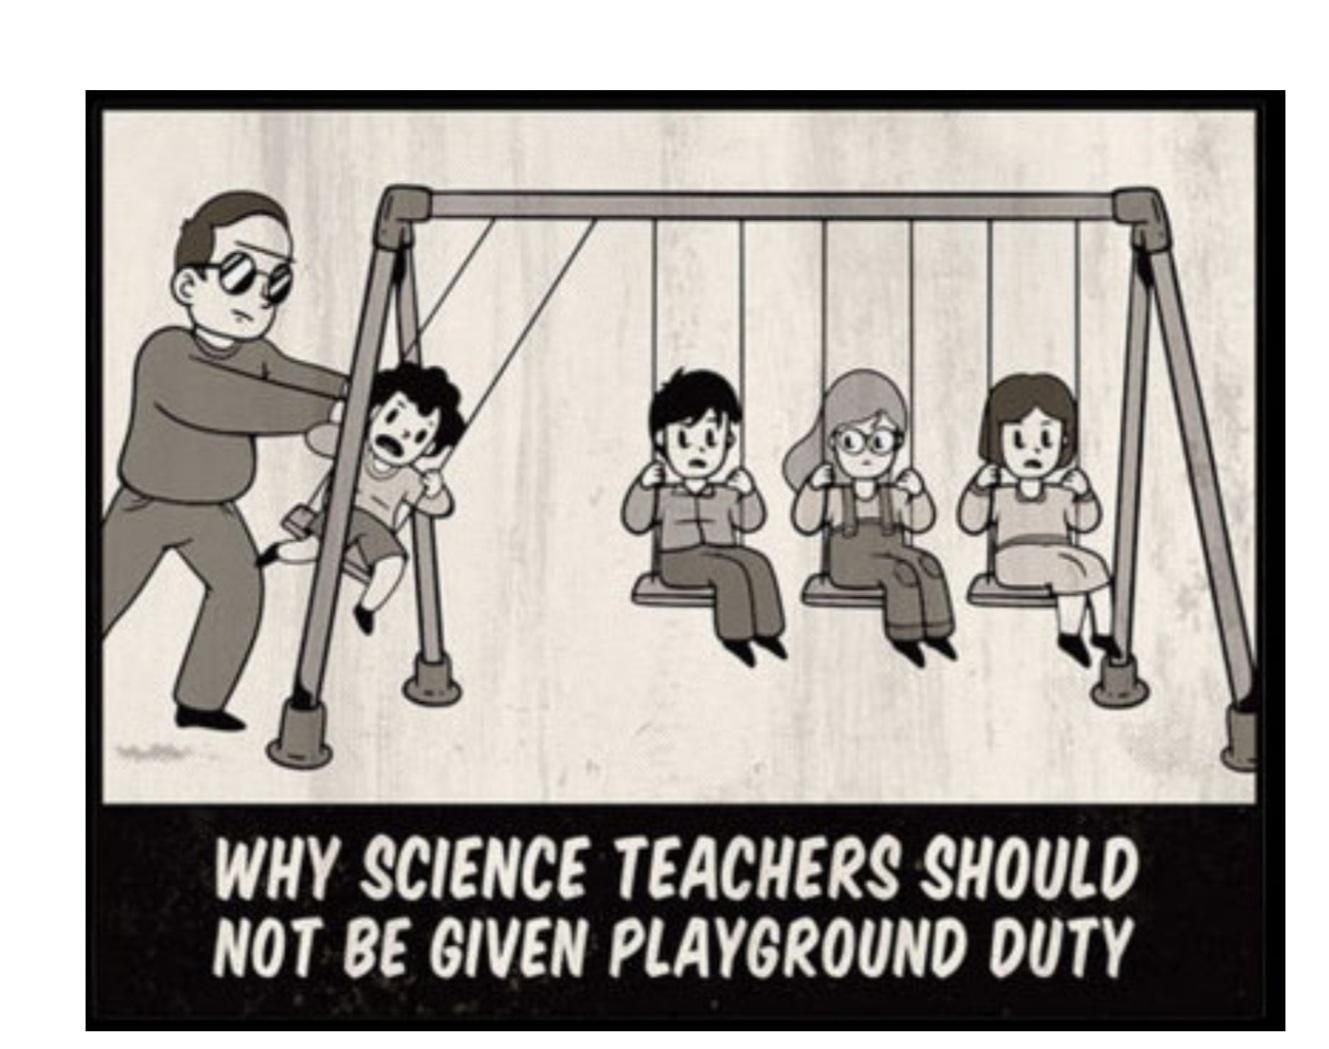 Science Teachers Playground Duty